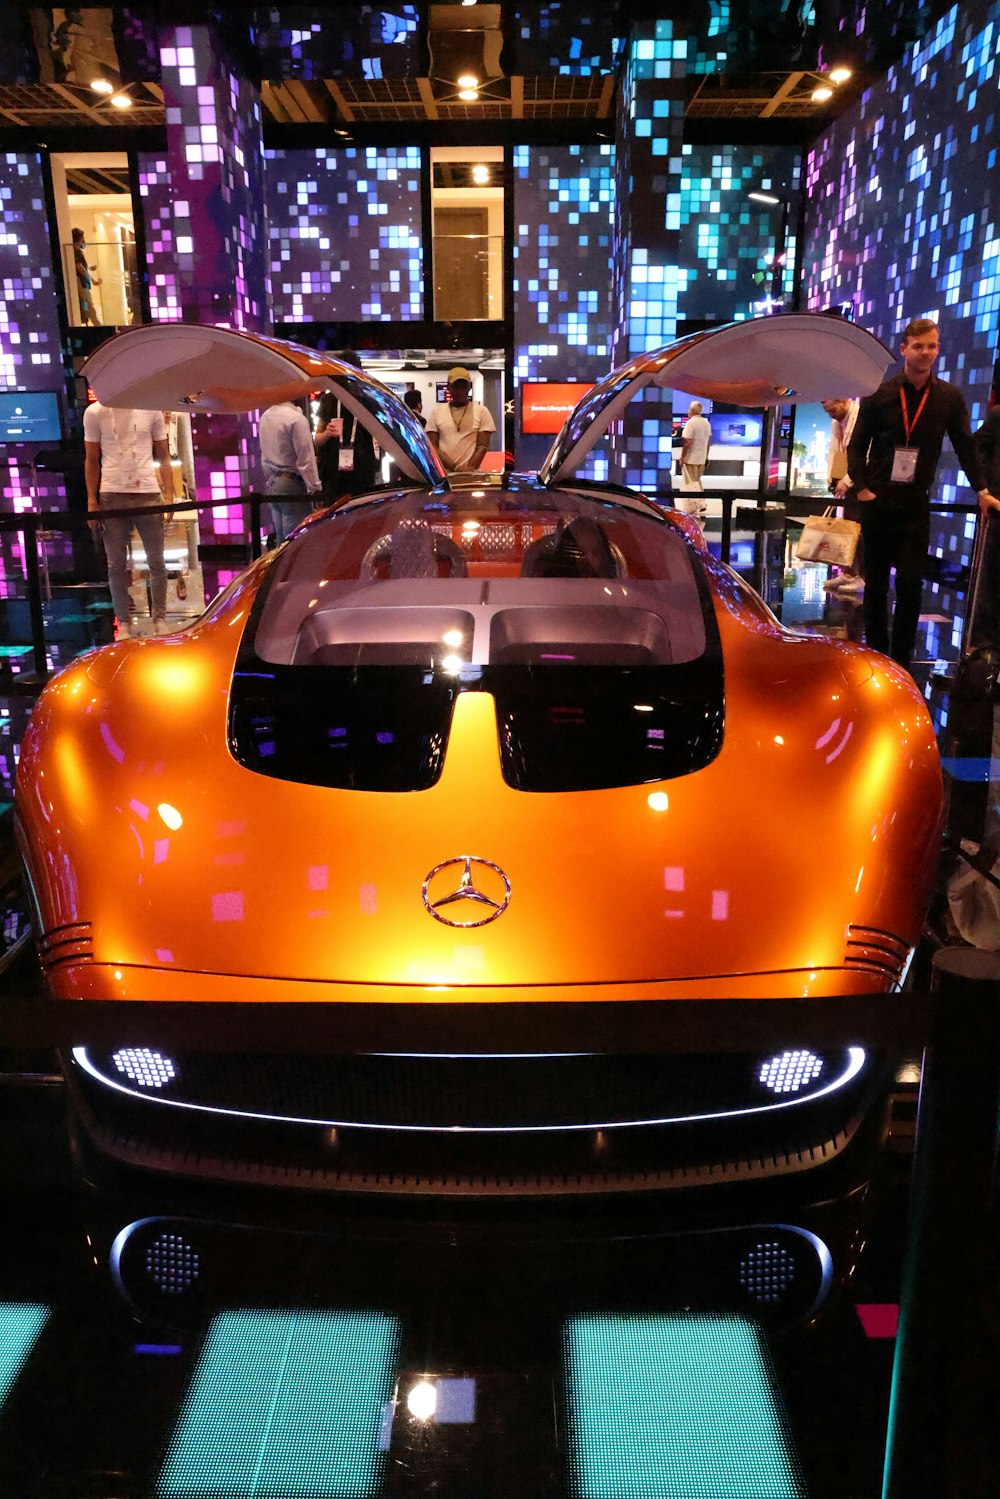 an orange sports car on display at a car show